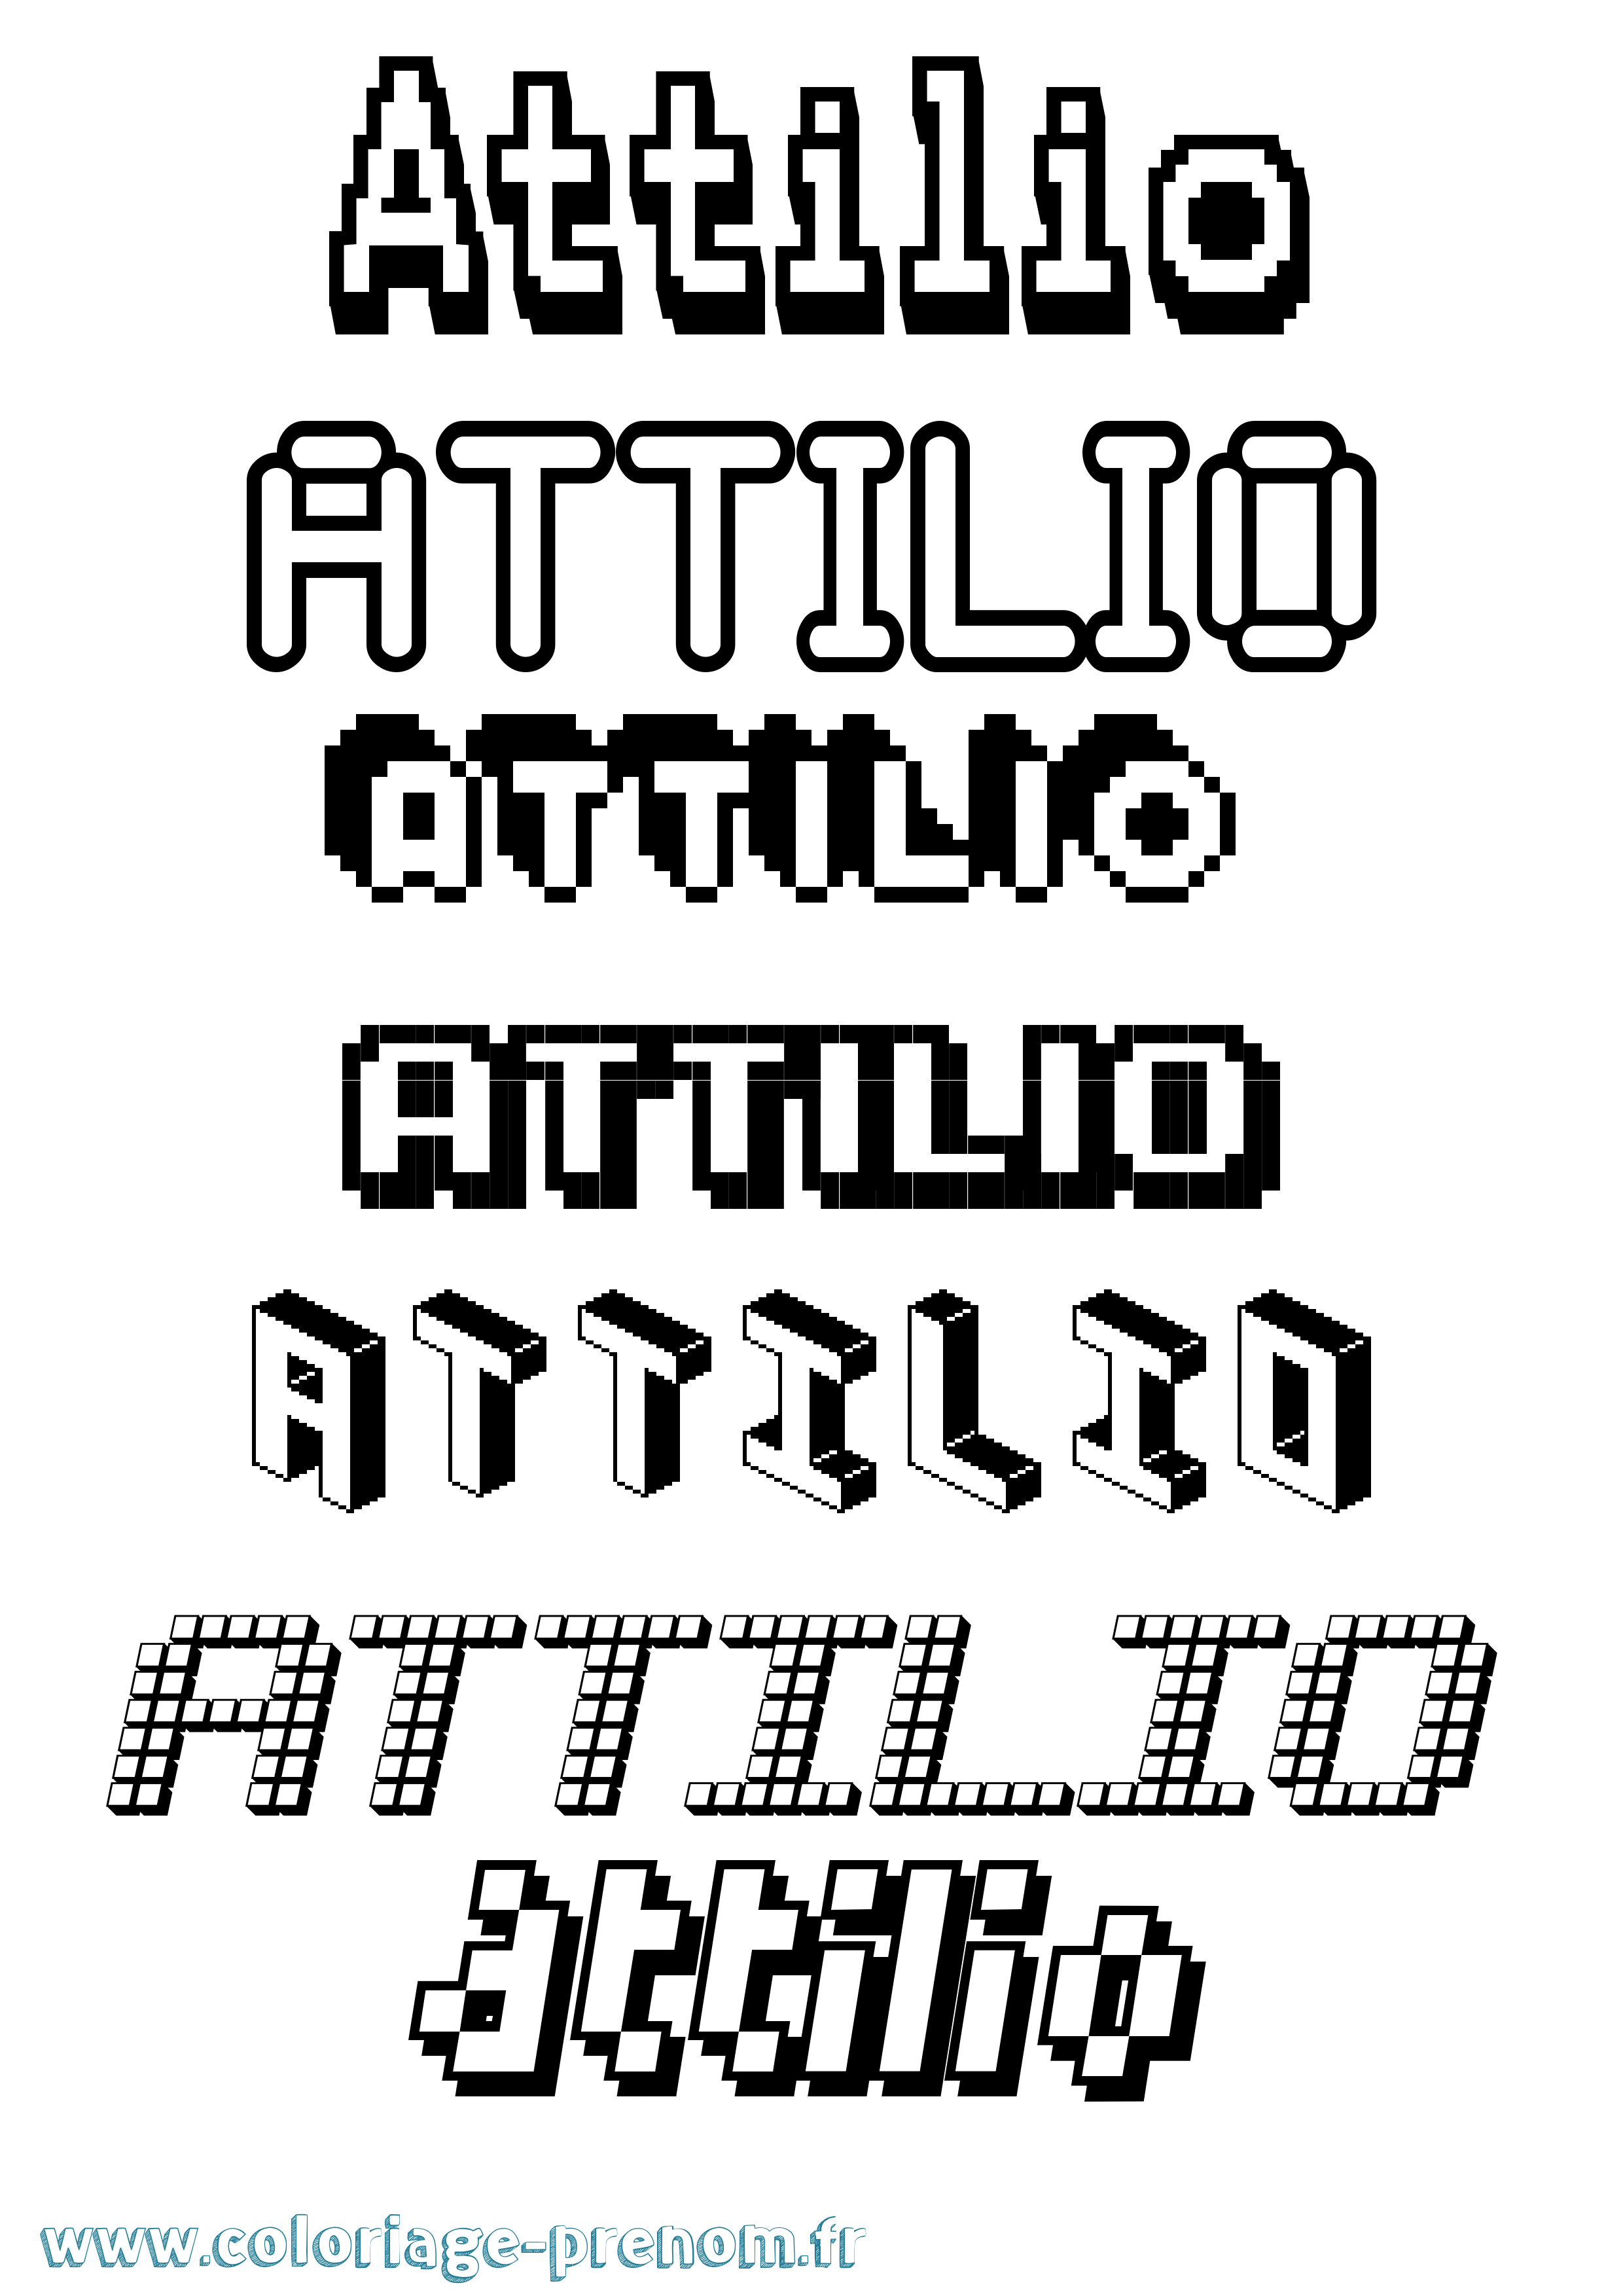 Coloriage prénom Attilio Pixel